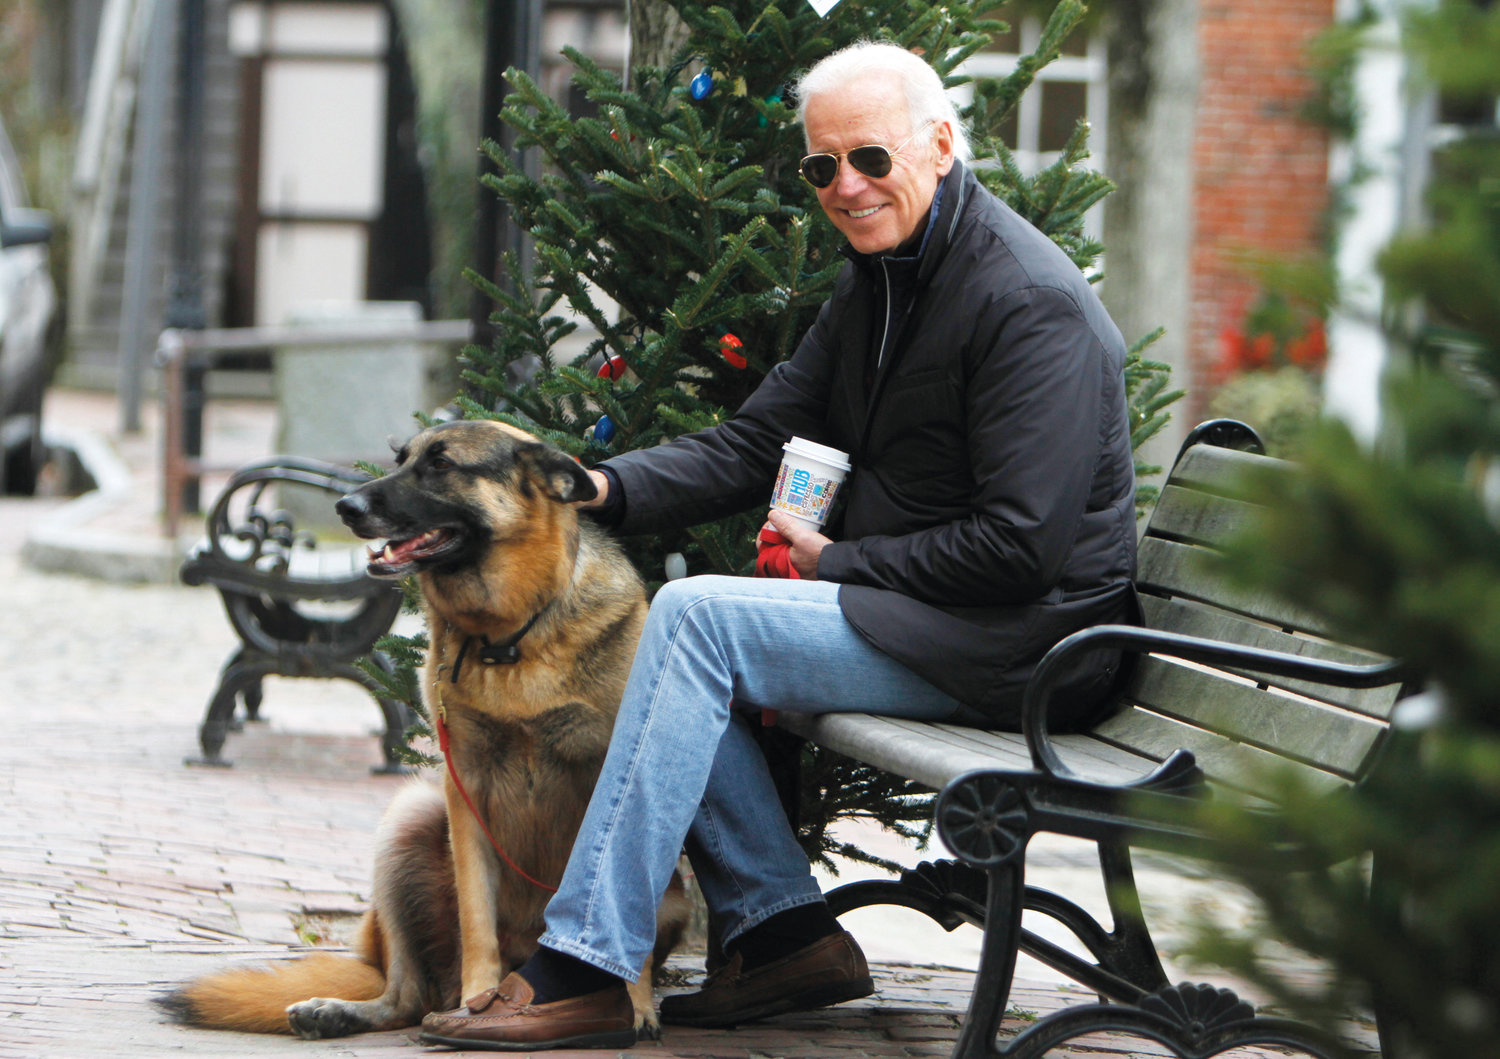 Then Vice-president Joe Biden relaxes on Main Street with his German shepherd Champ in 2013.